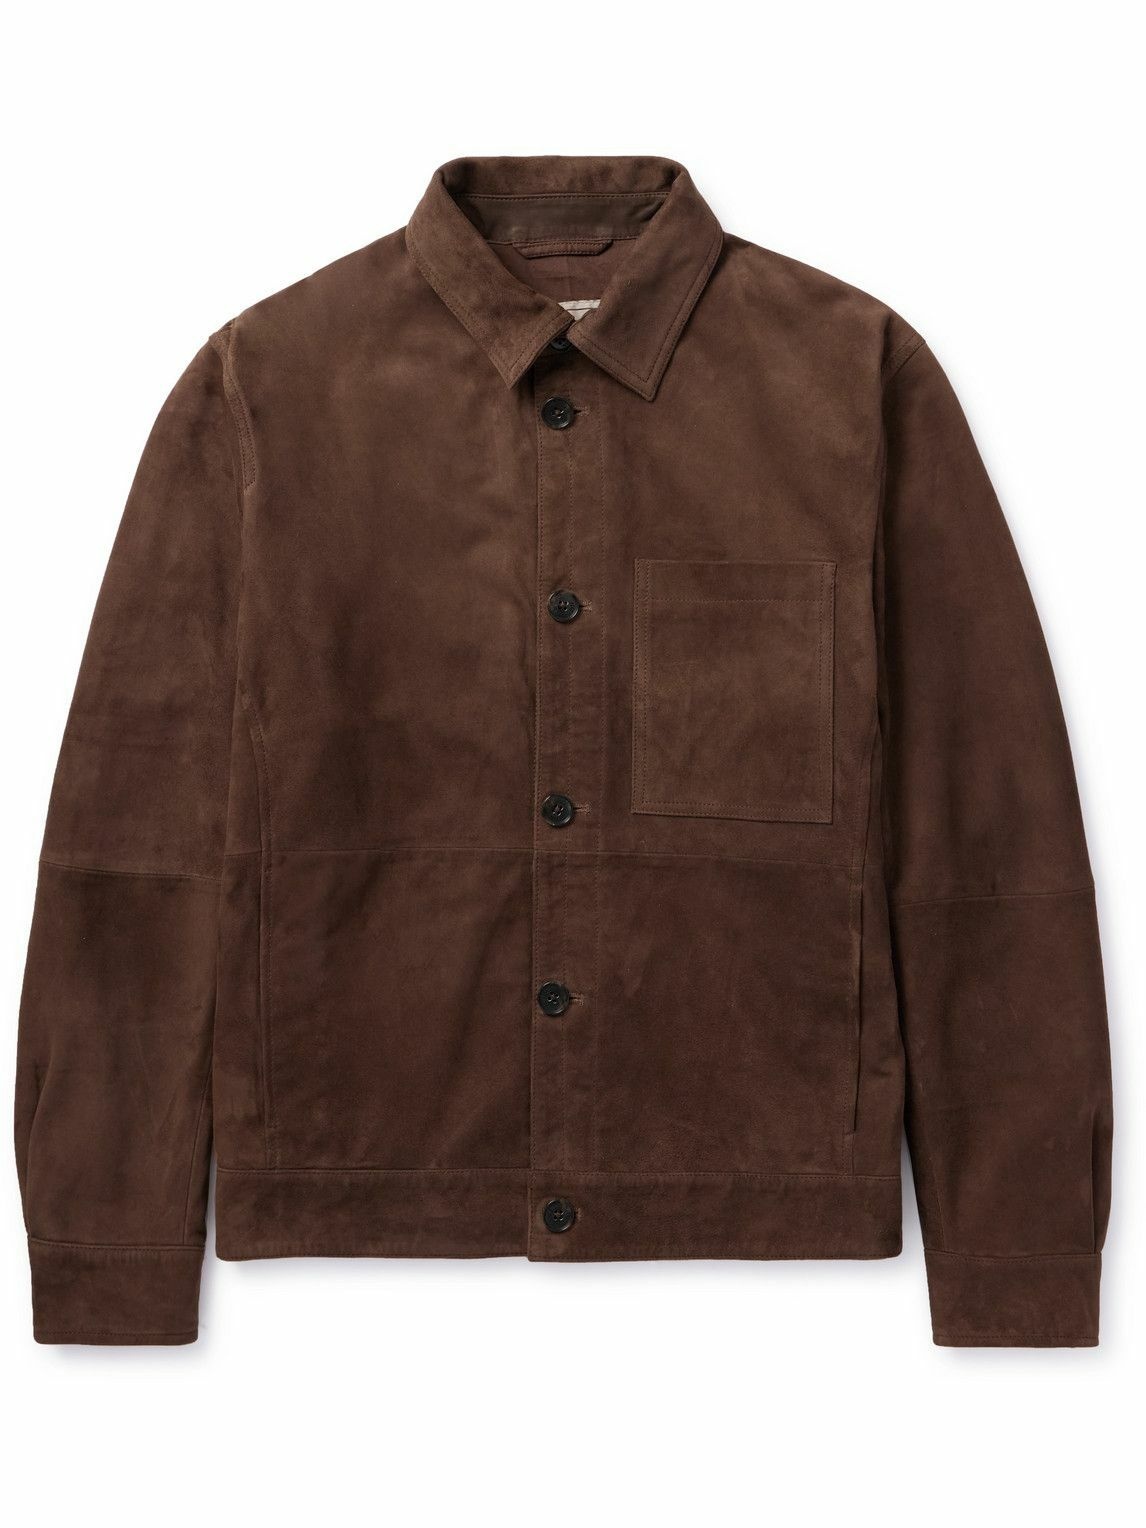 Baracuta - Suede Shirt Jacket - Brown Baracuta